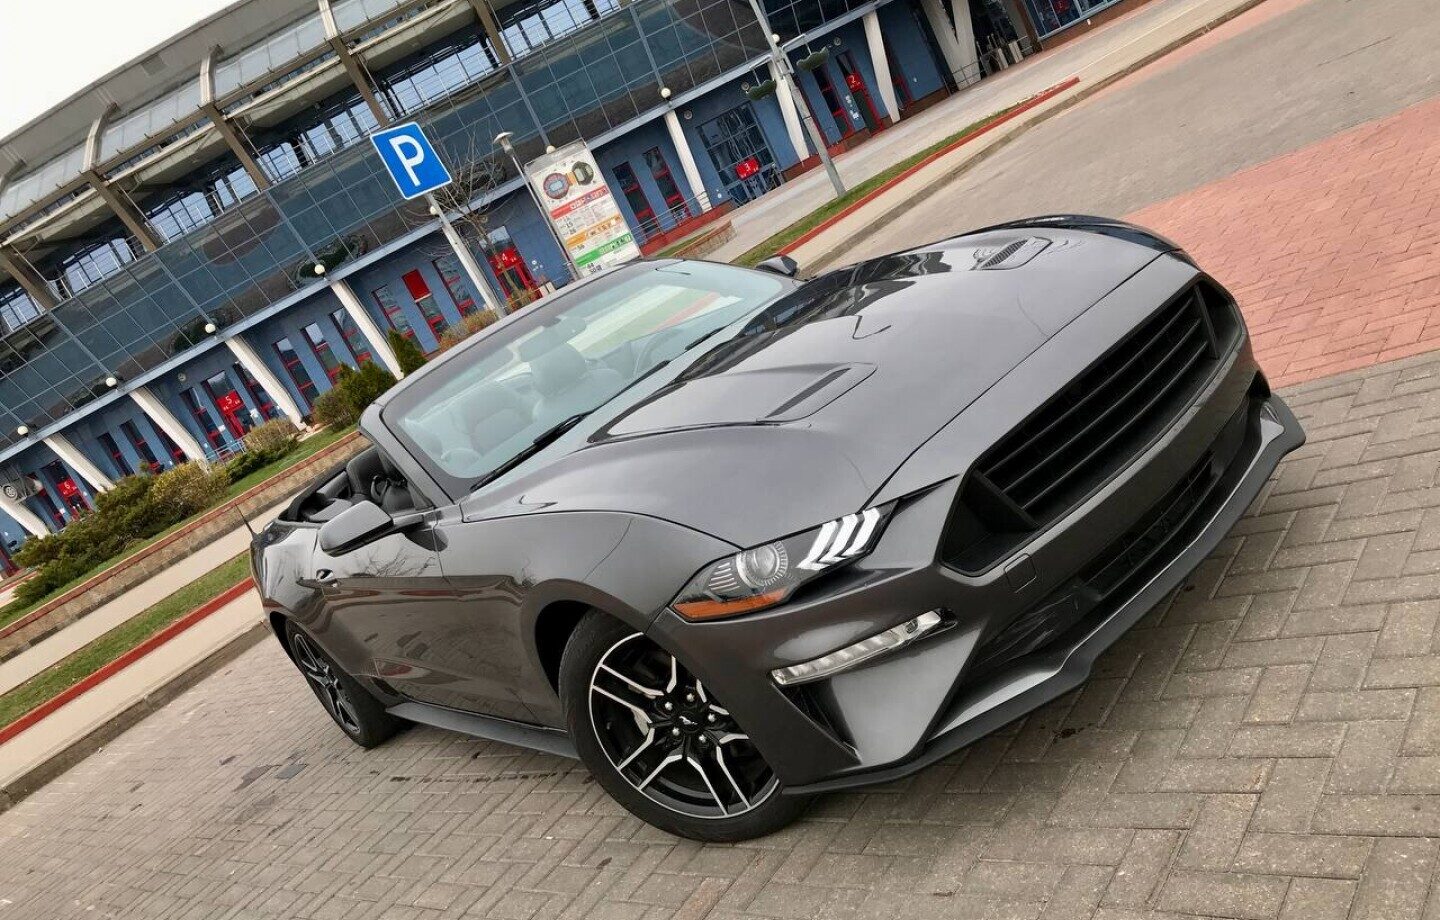 Скидка на ареду Ford Mustang VI Cabrio 2019 года выпуска, кпп: Автомат 